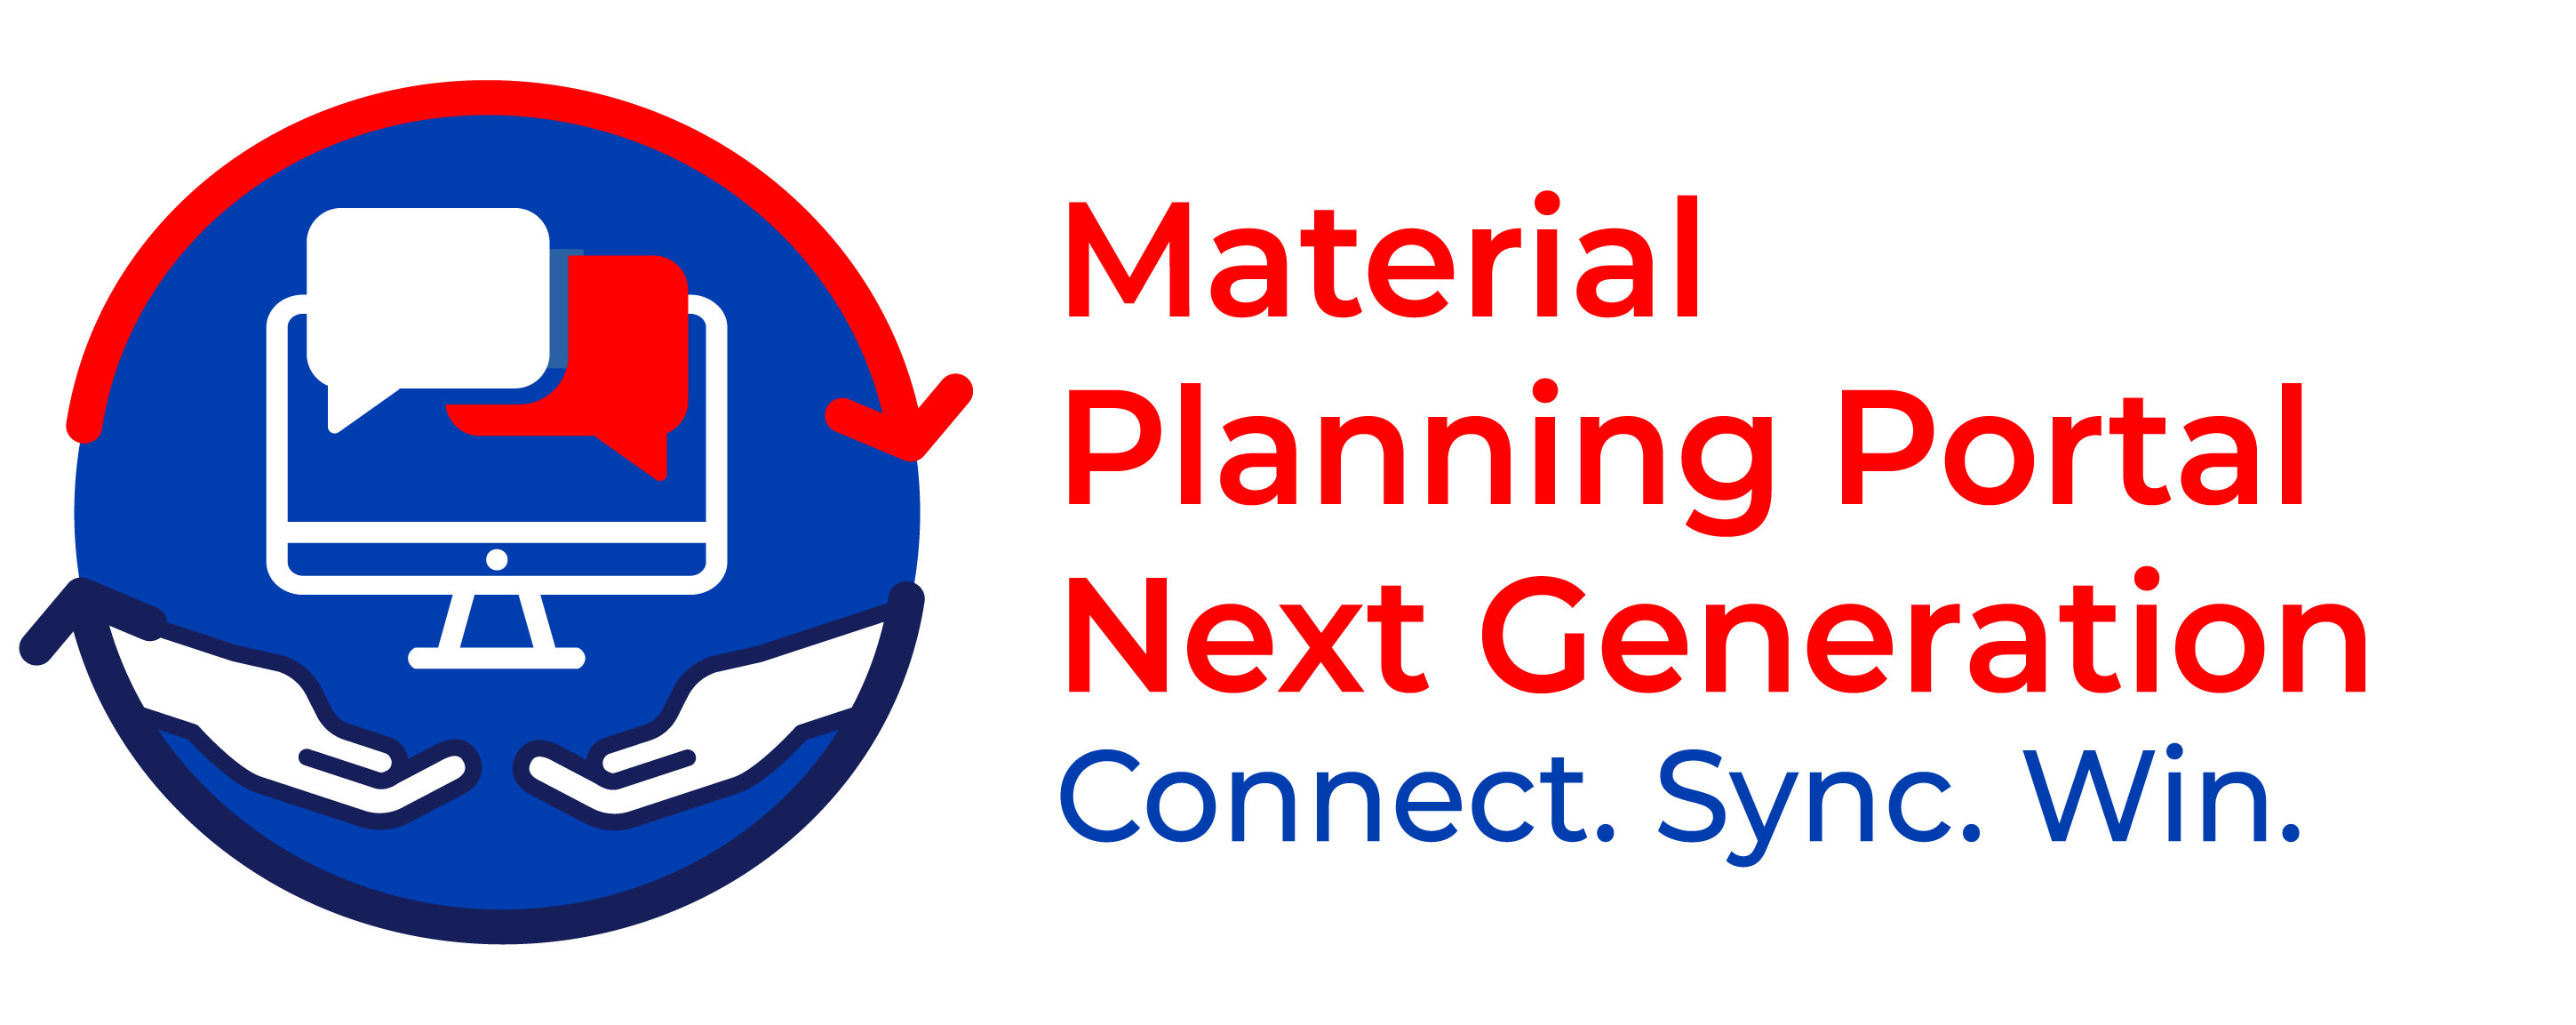 Material Planning Portal